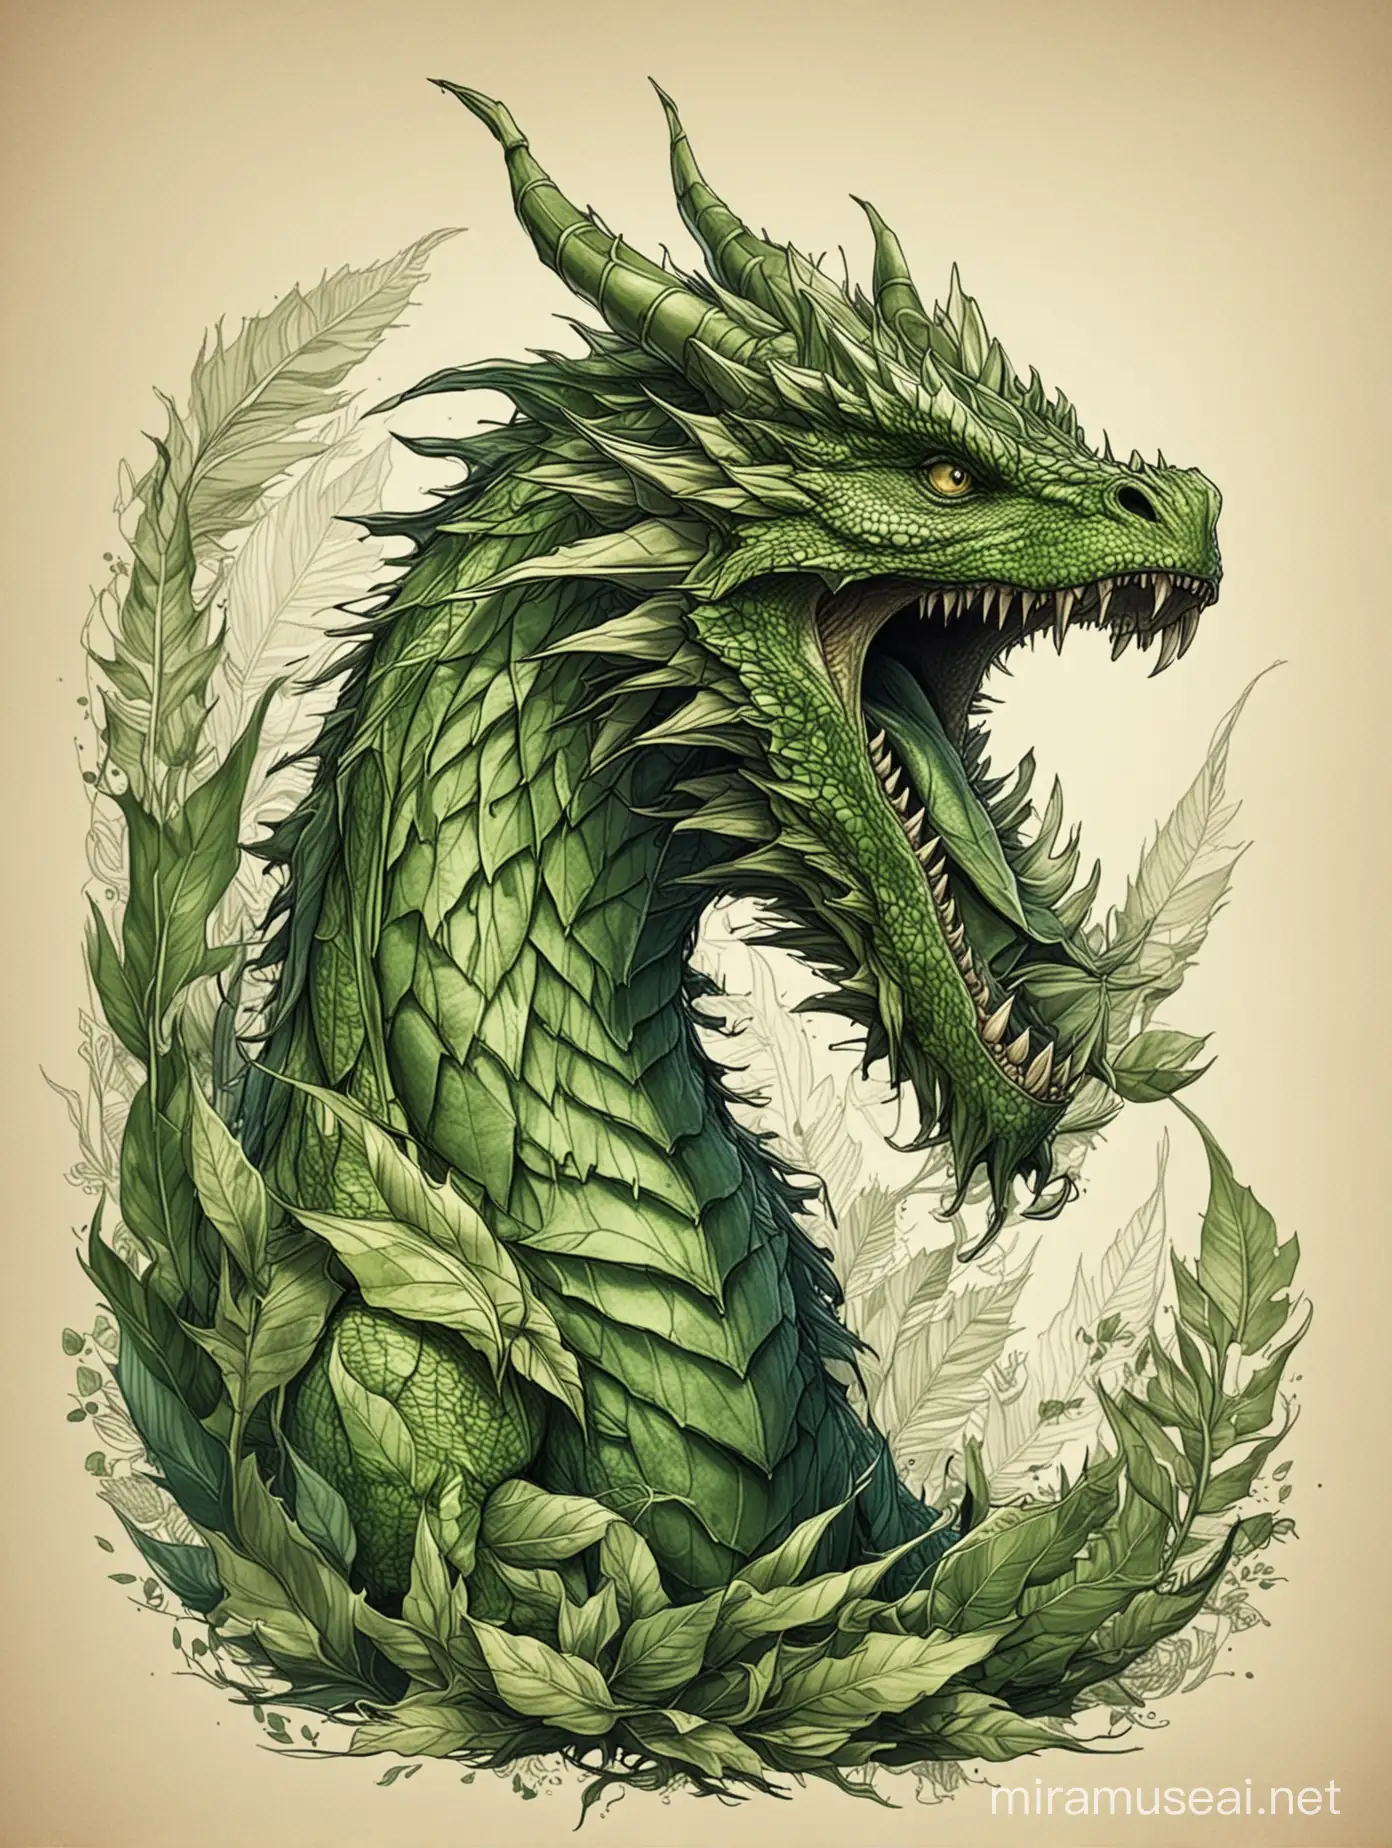 Furious Ladon Dragon Sketch Art of a Green Leafy Beast